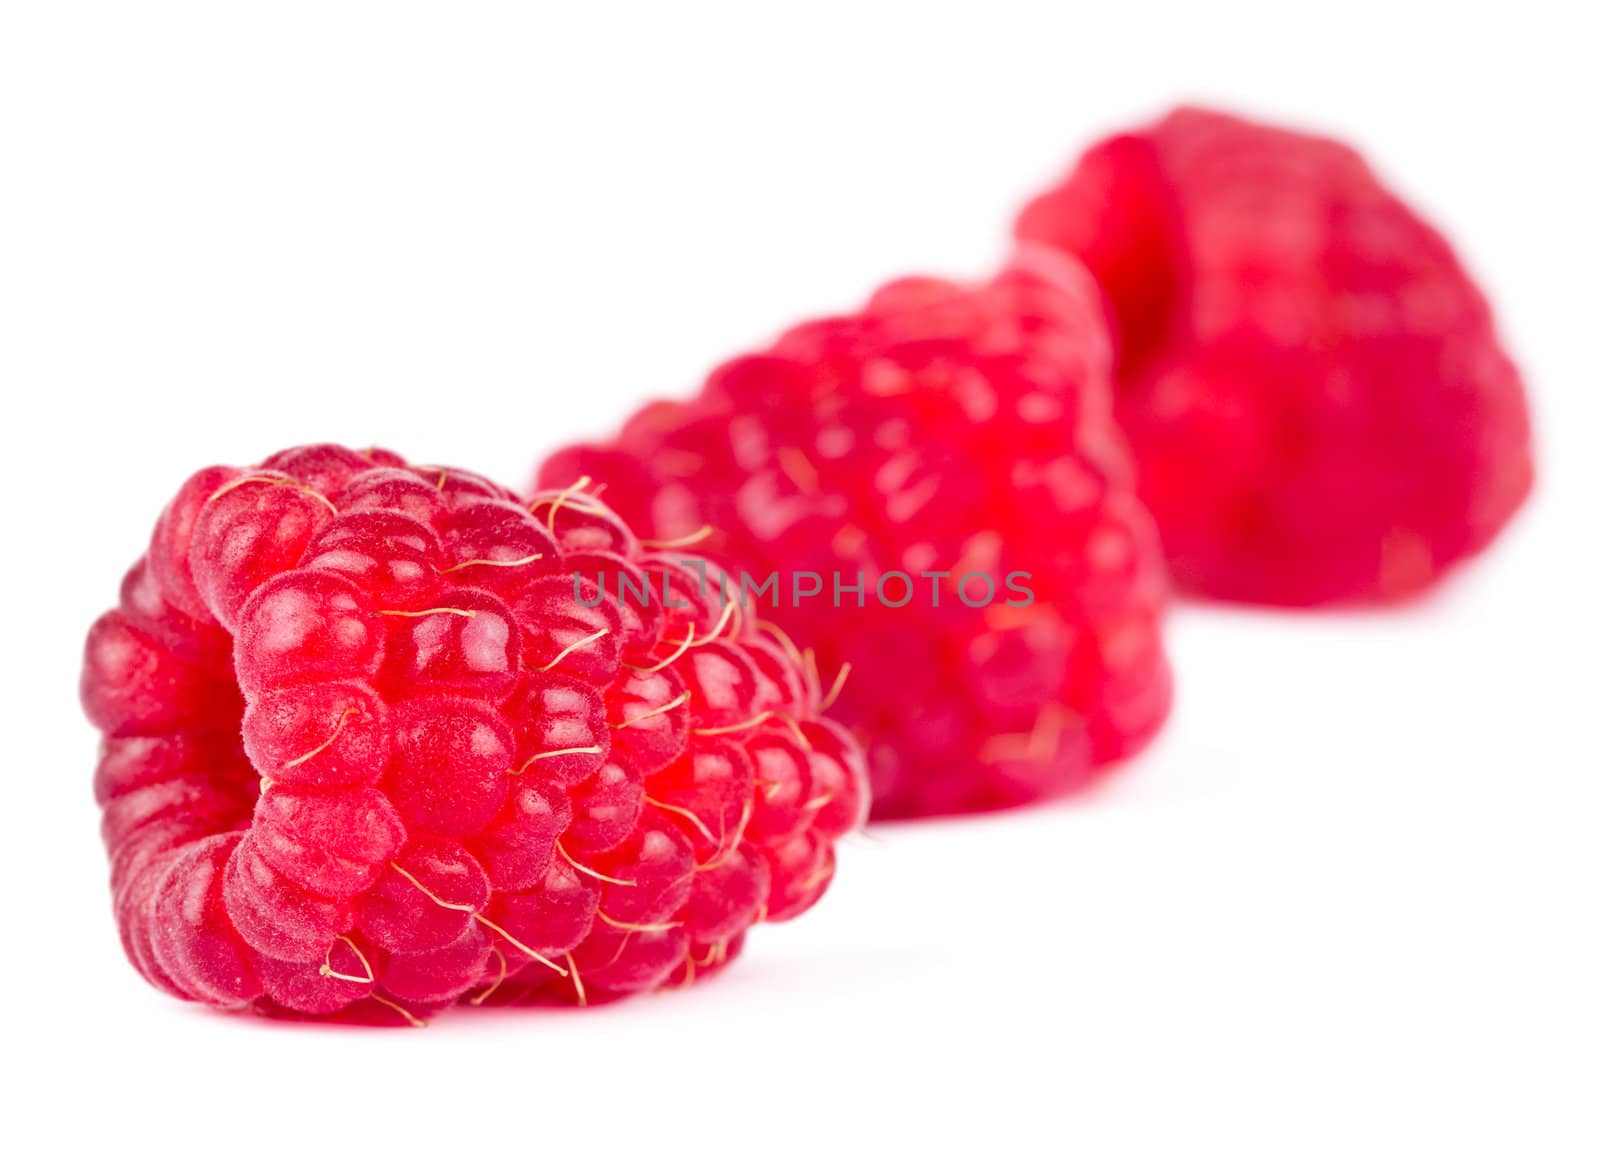 Raspberries on white background by Bedolaga